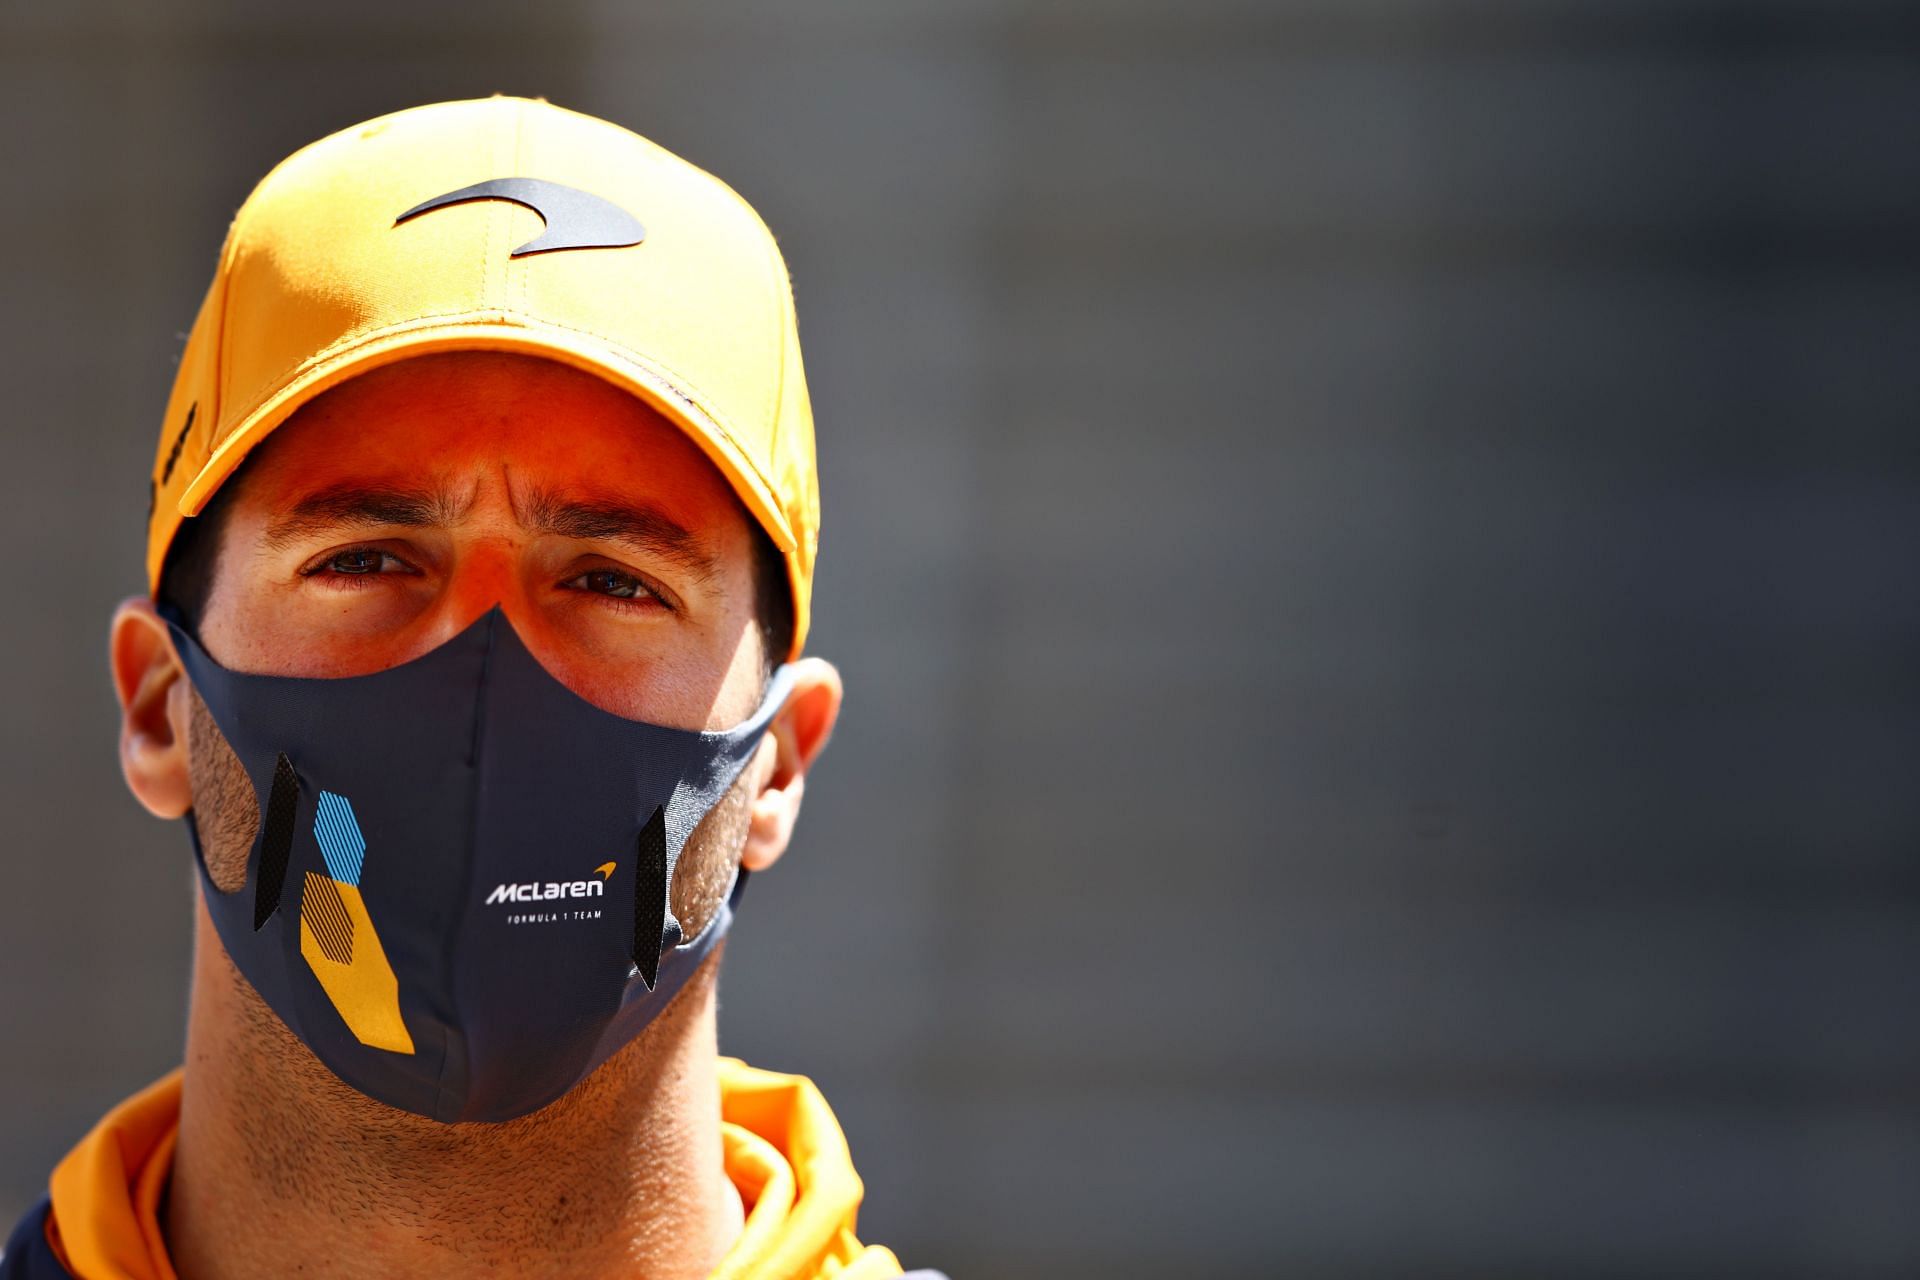 F1 Grand Prix of Bahrain - Practice - Daniel Ricciardo arrives at the Paddock